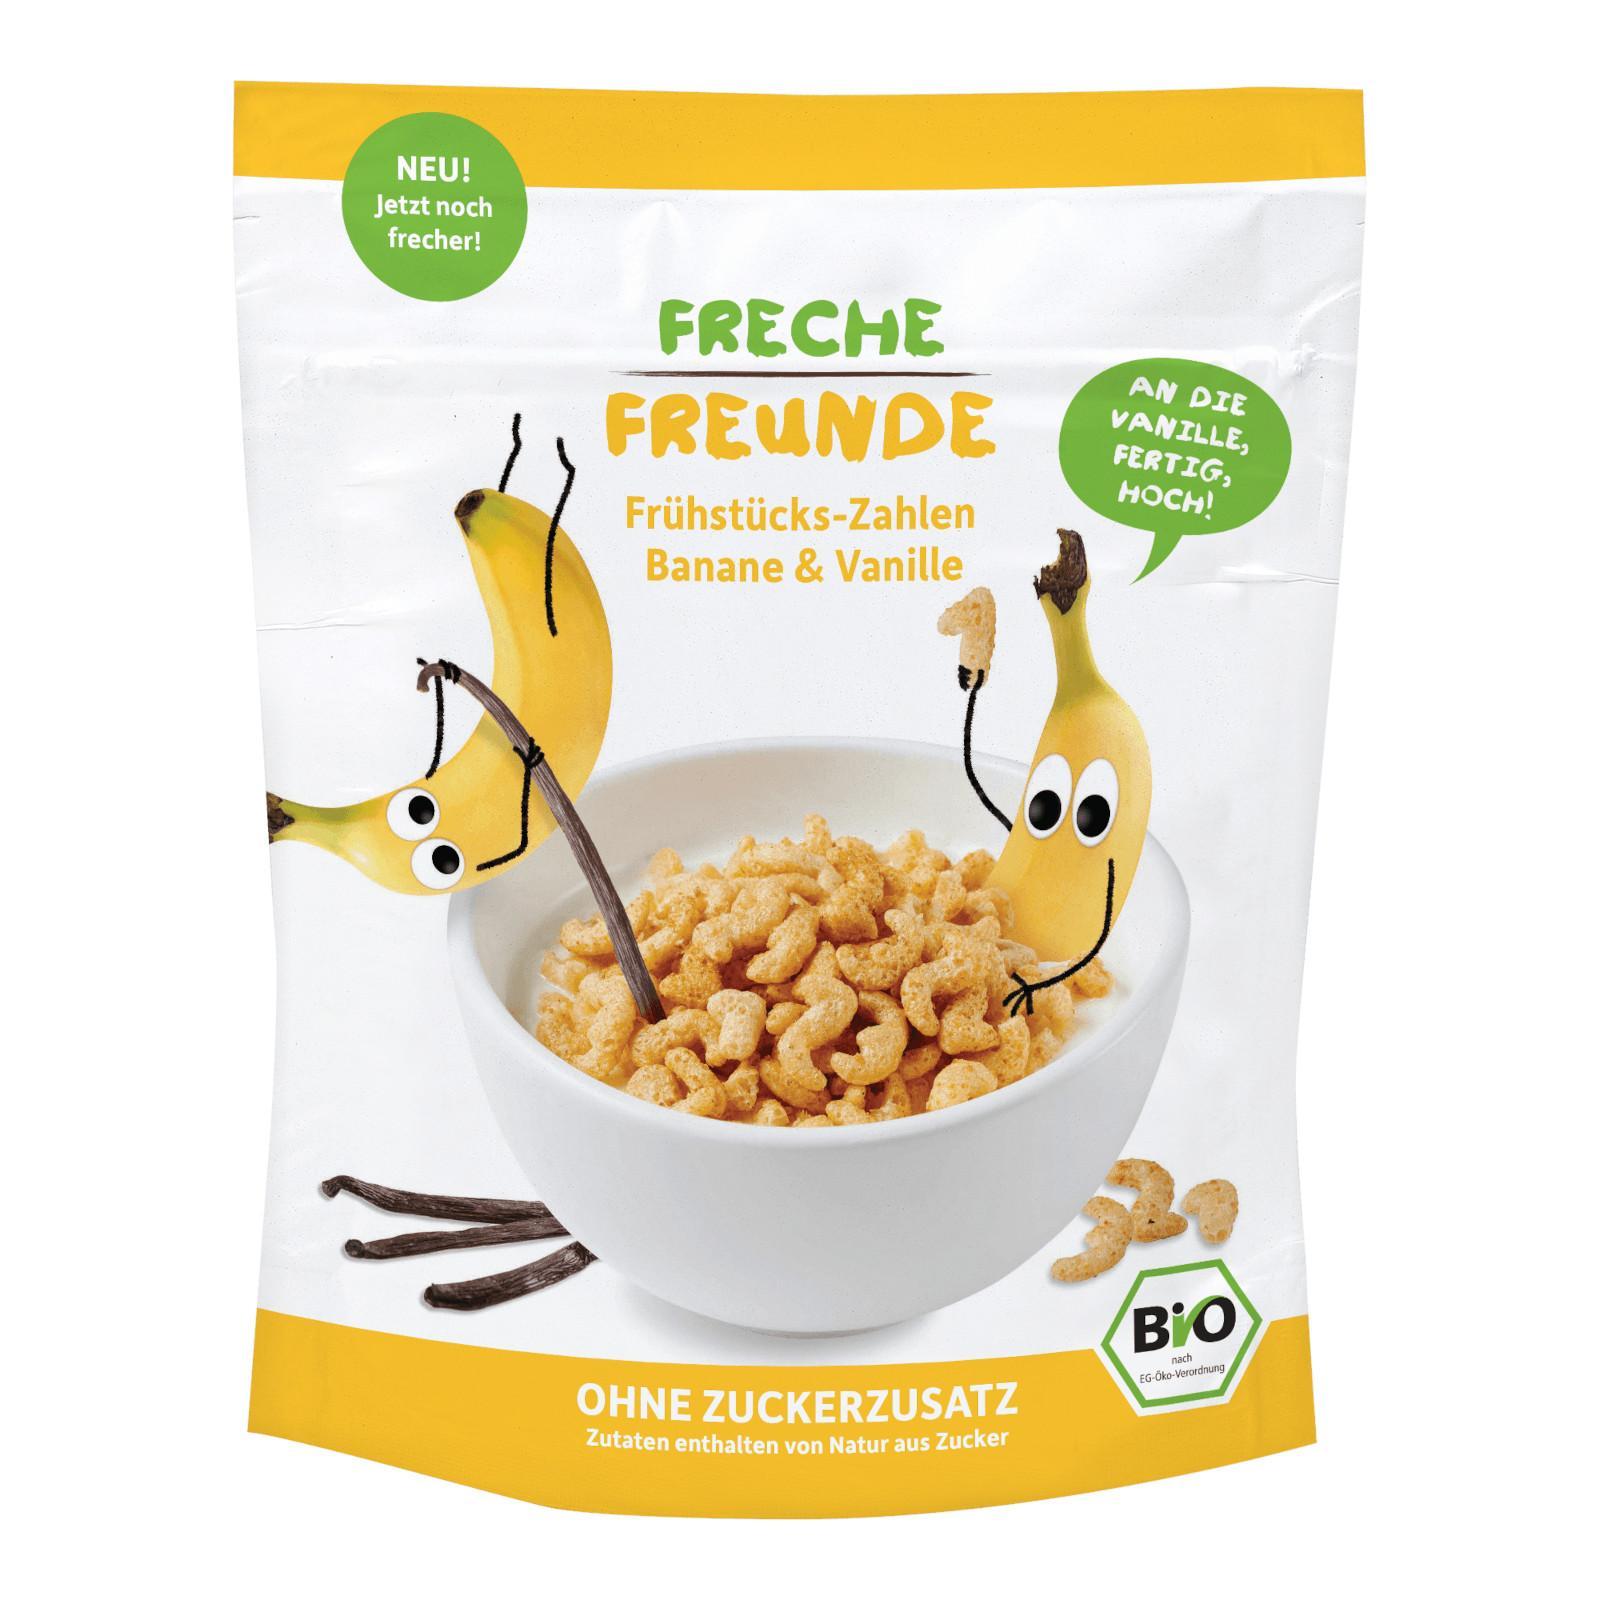 FRECHEFREUN FRECHE FREUNDE BIO Cereálie křupavá čísla Banán a vanilka 125 g, 12m+